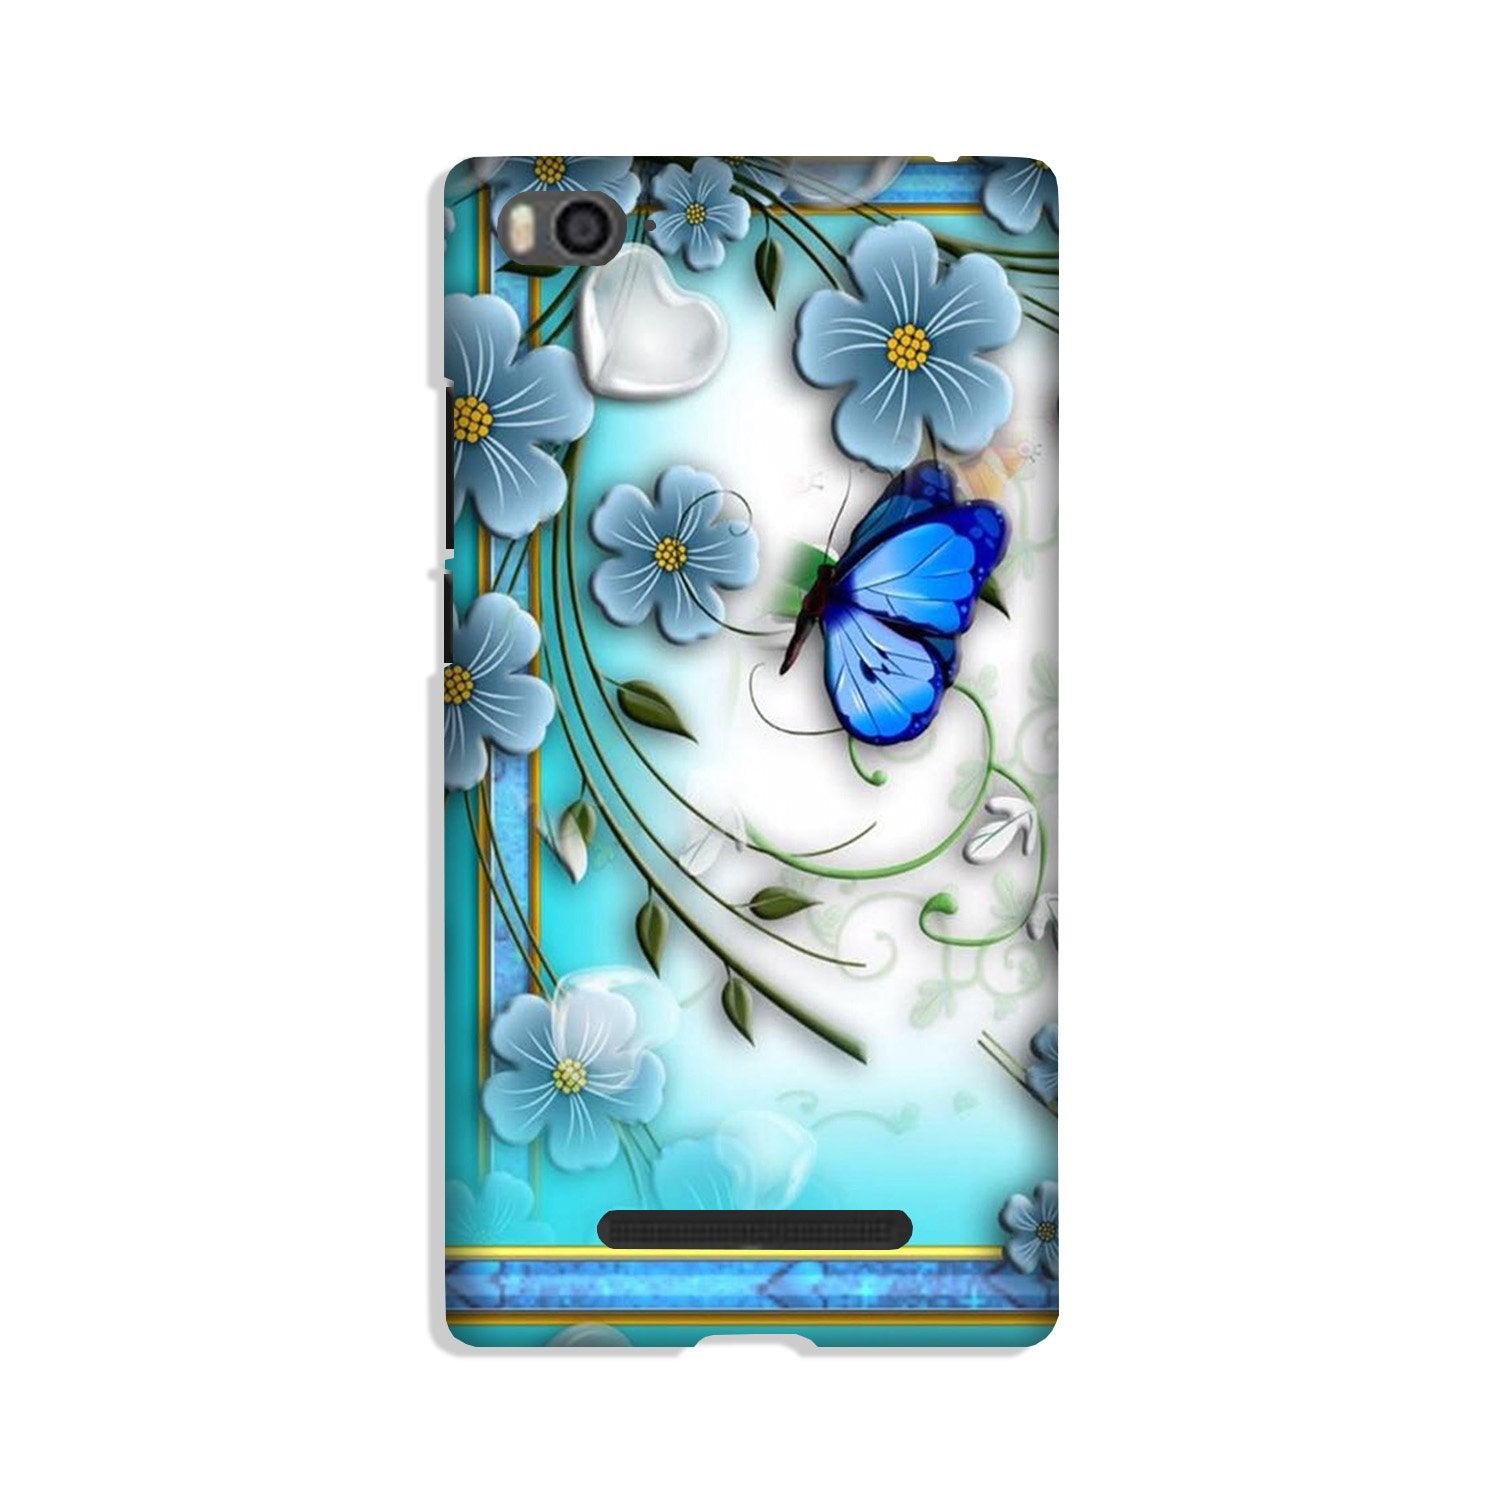 Blue Butterfly Case for Xiaomi Mi 4i